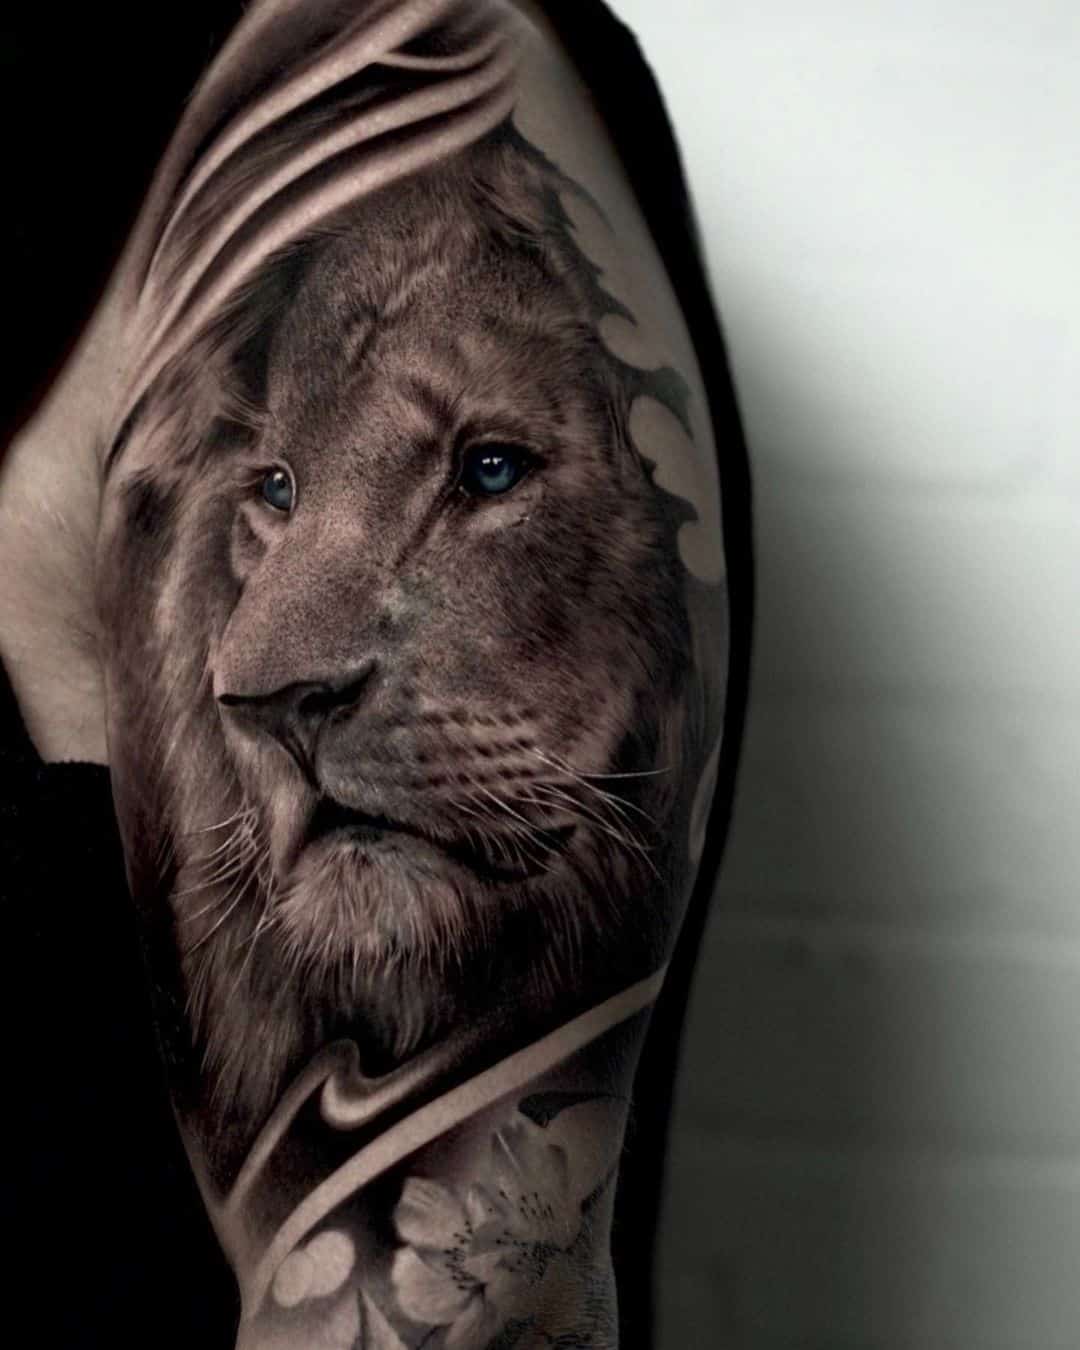 Auston Matthews gets inked with massive lion tattoo